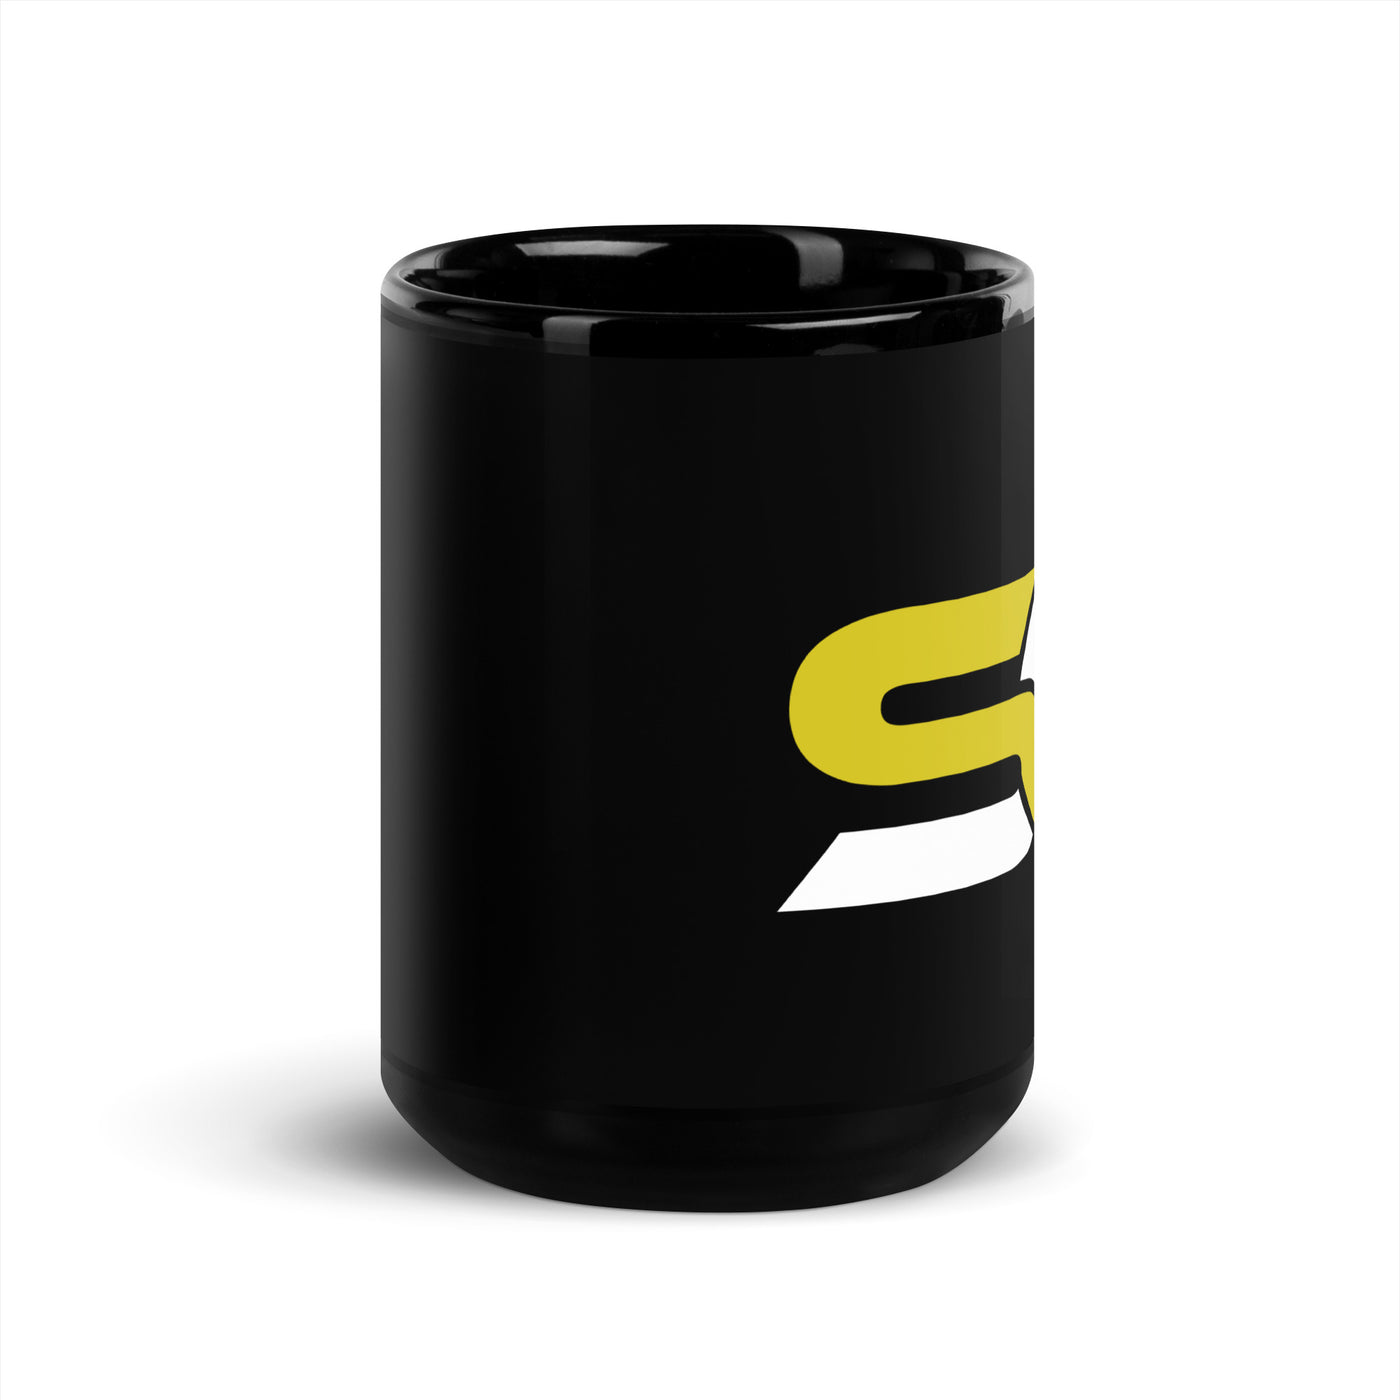 SinCityStellar  Black Glossy Mug